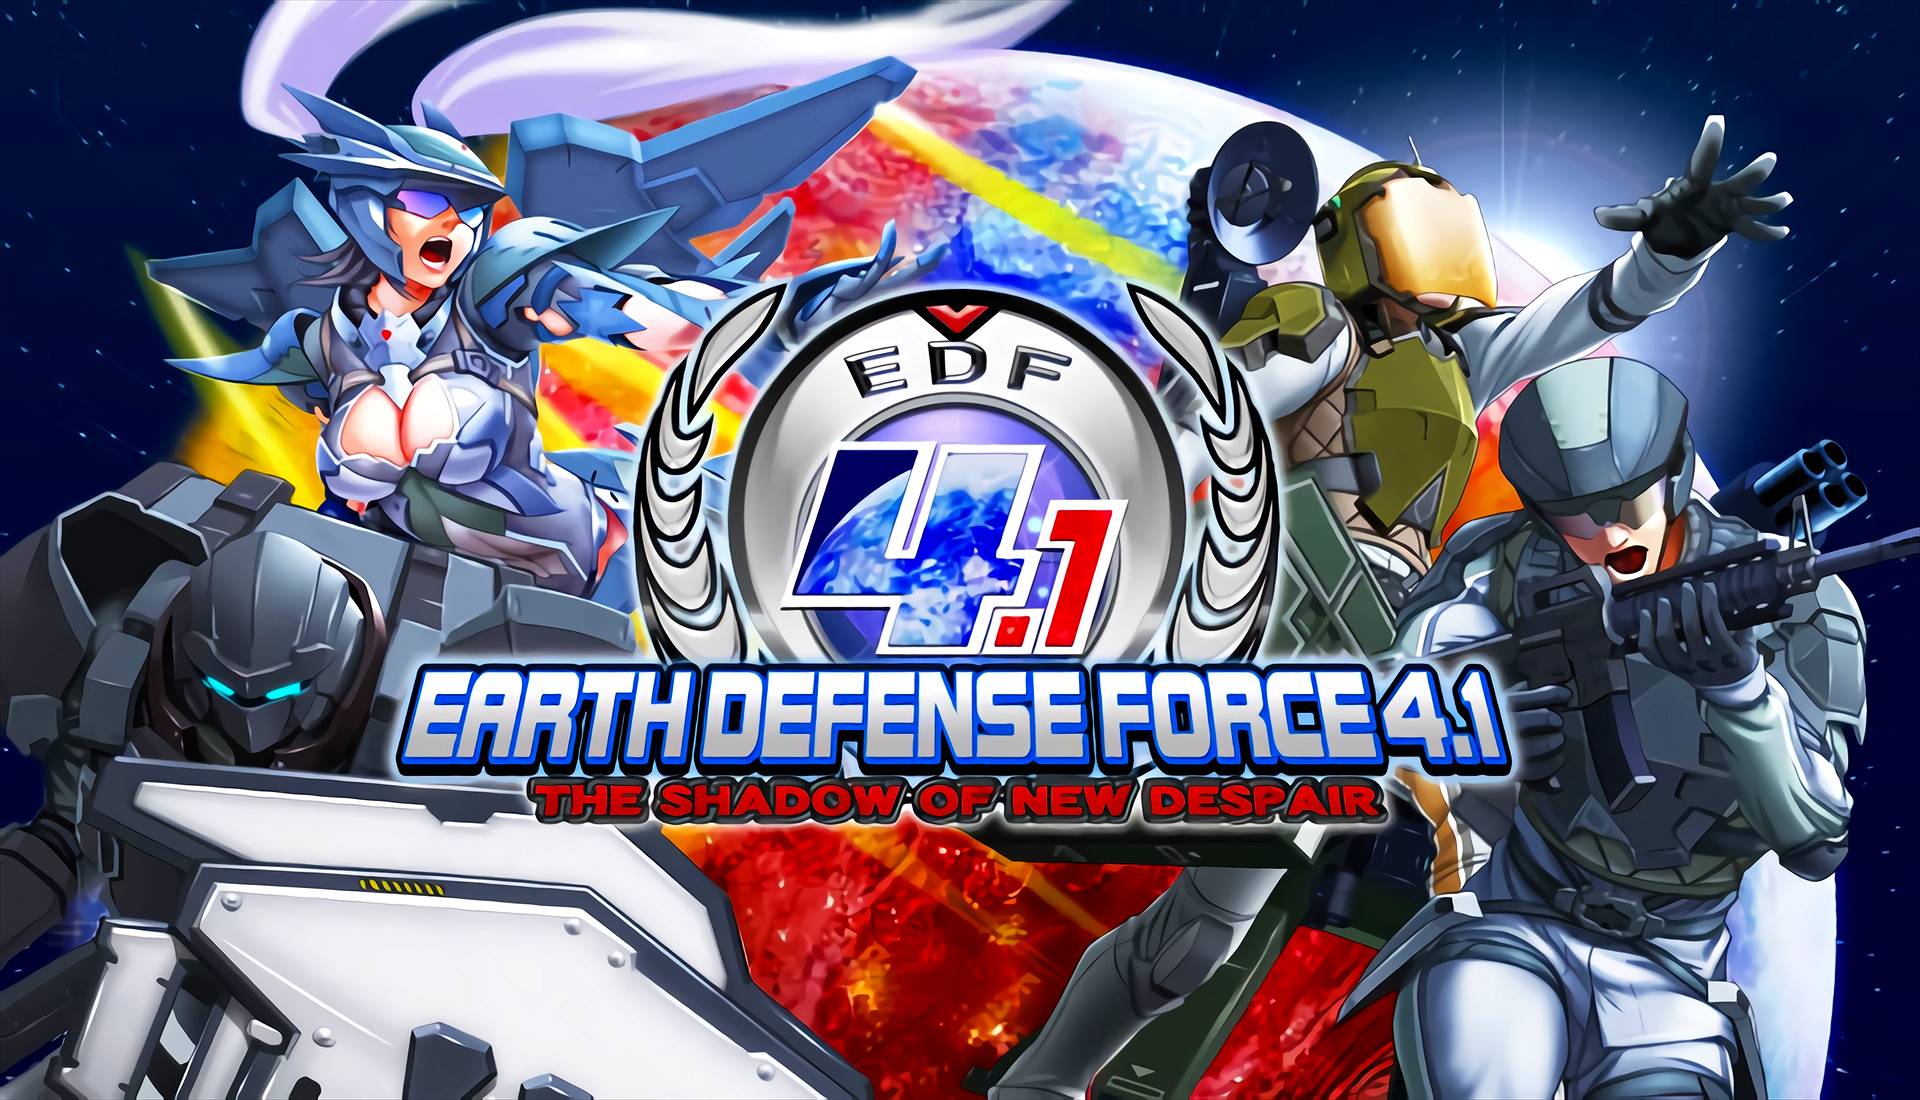 Pc ゲーム Earth Defense Force 4 1 The Shadow Of New Despair をボーダーレスウィンドウモードでプレイする方法 Awgs Foundry